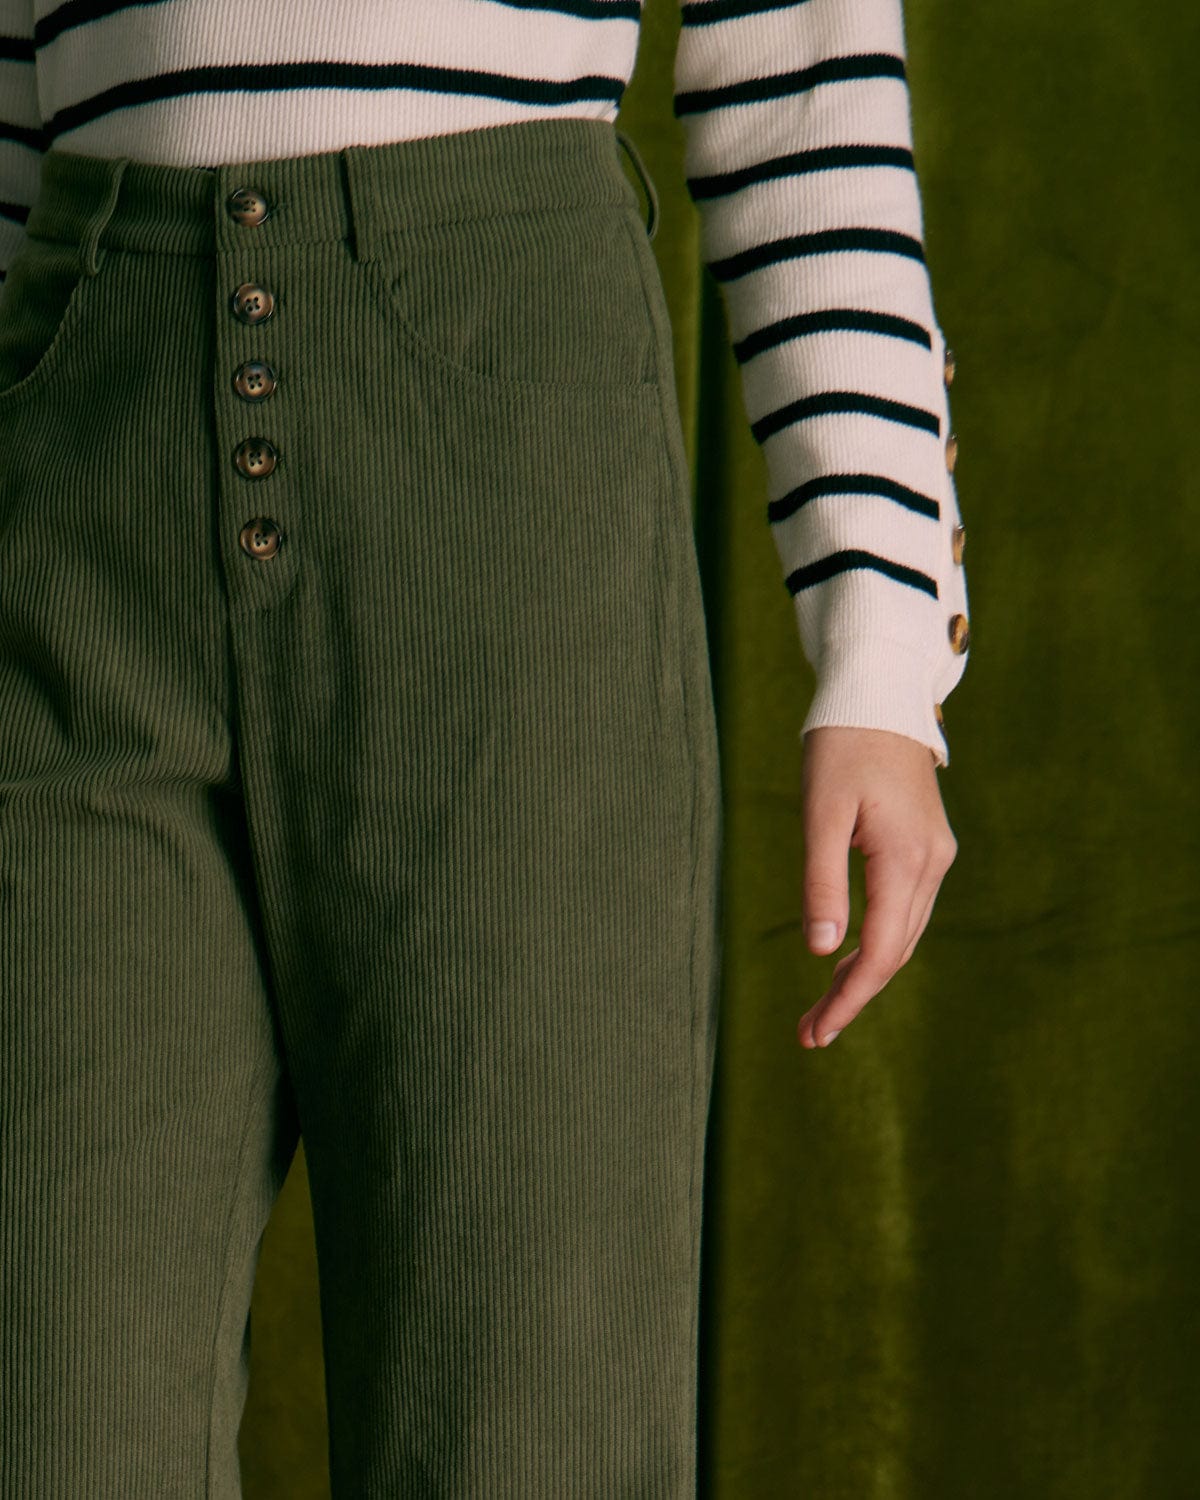 Forest Green Corduroy Pants Men - Trendy Slim Fit Pants